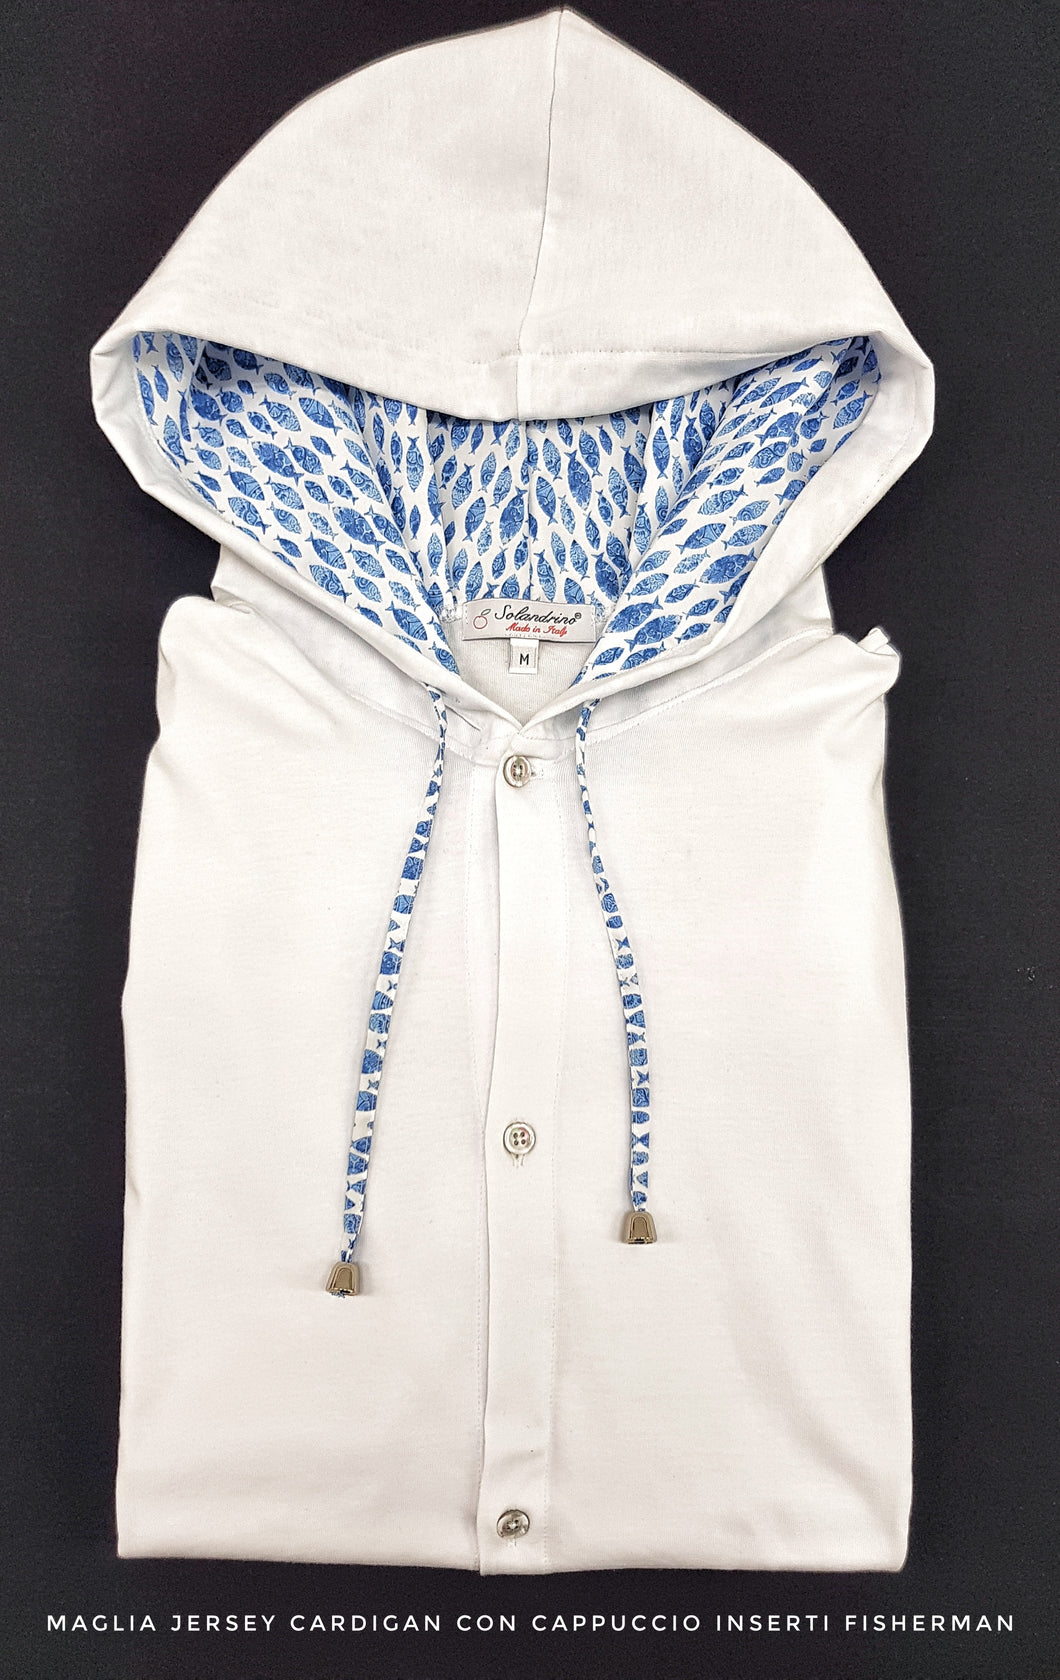 Maglia cardigan jersey Bianca con Cappuccio Design fisherman  made in Italy Fantasia  100% cotone - Sweatshirt hoodie